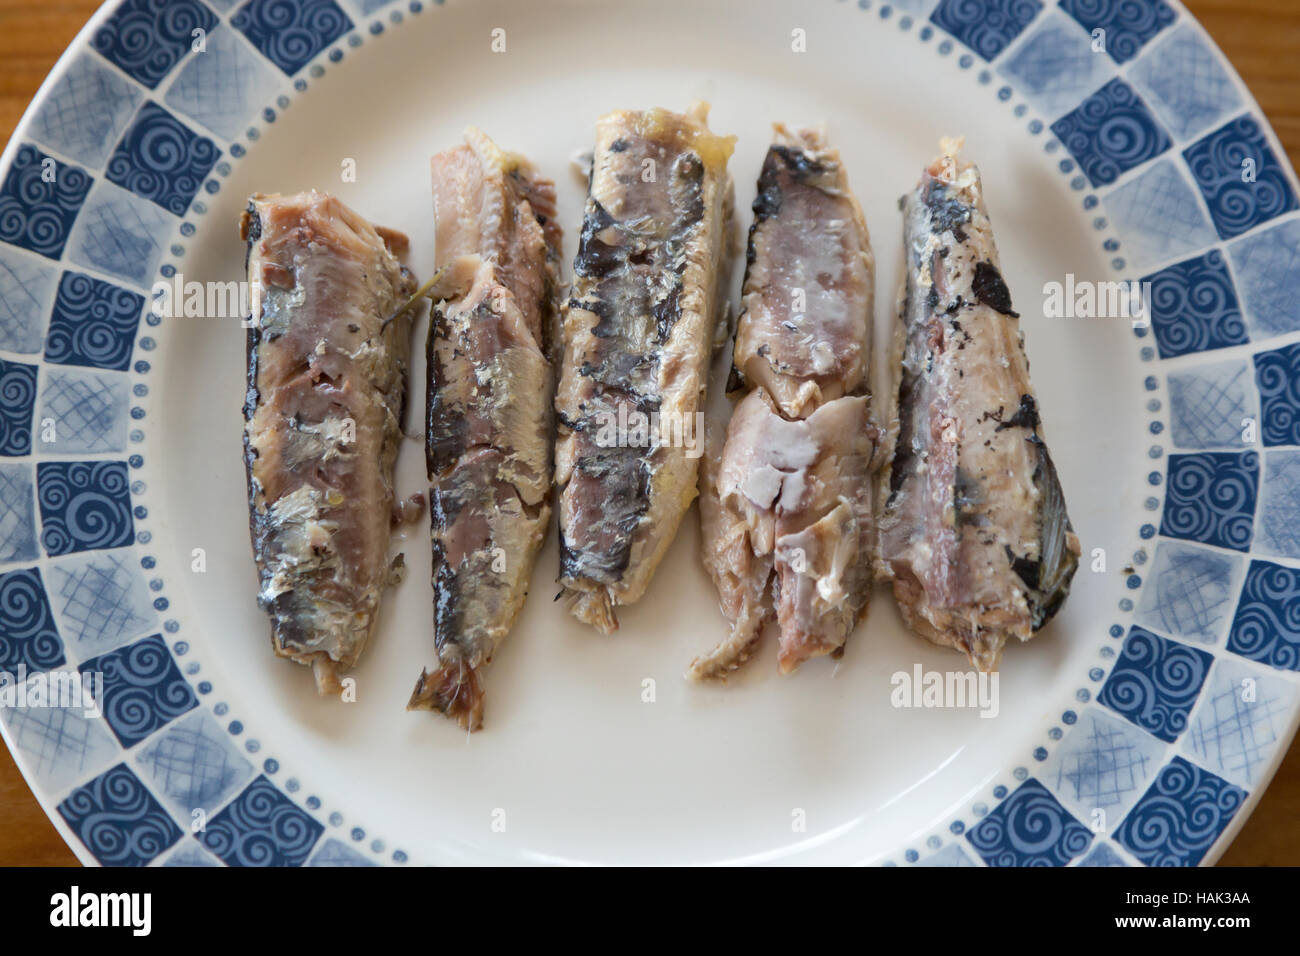 Tinned Sardines on a plate Stock Photo